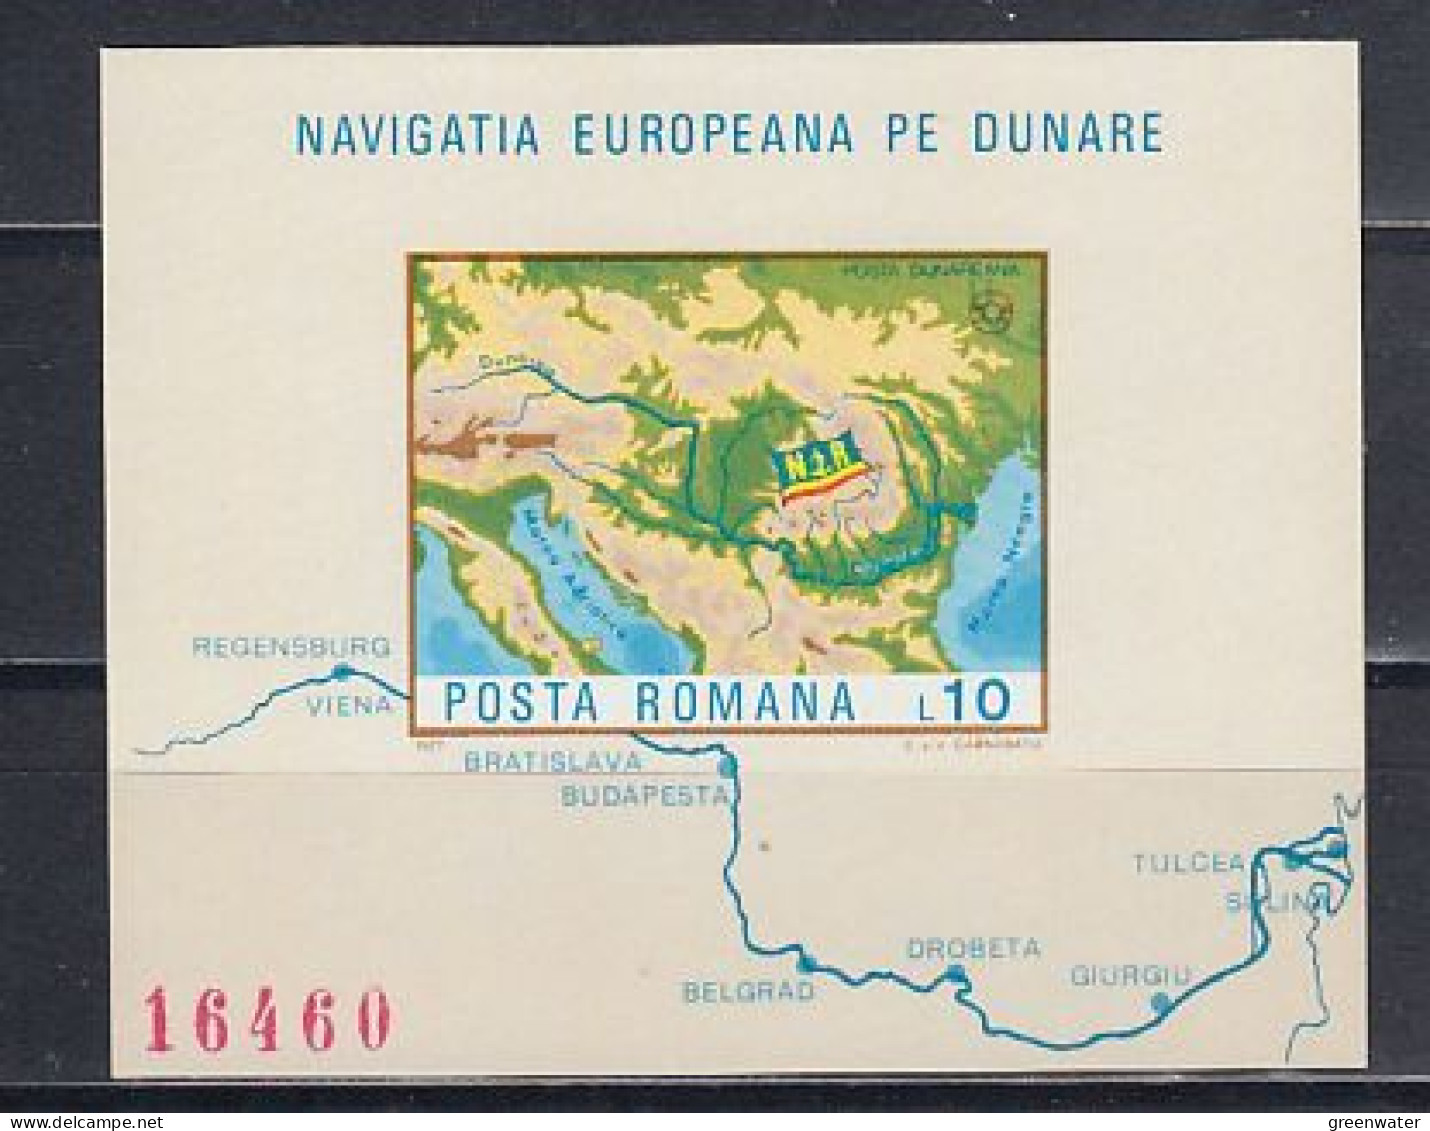 Romania 1977 Danube M/s IMPERFORATED ** Mnh (59529) - European Ideas